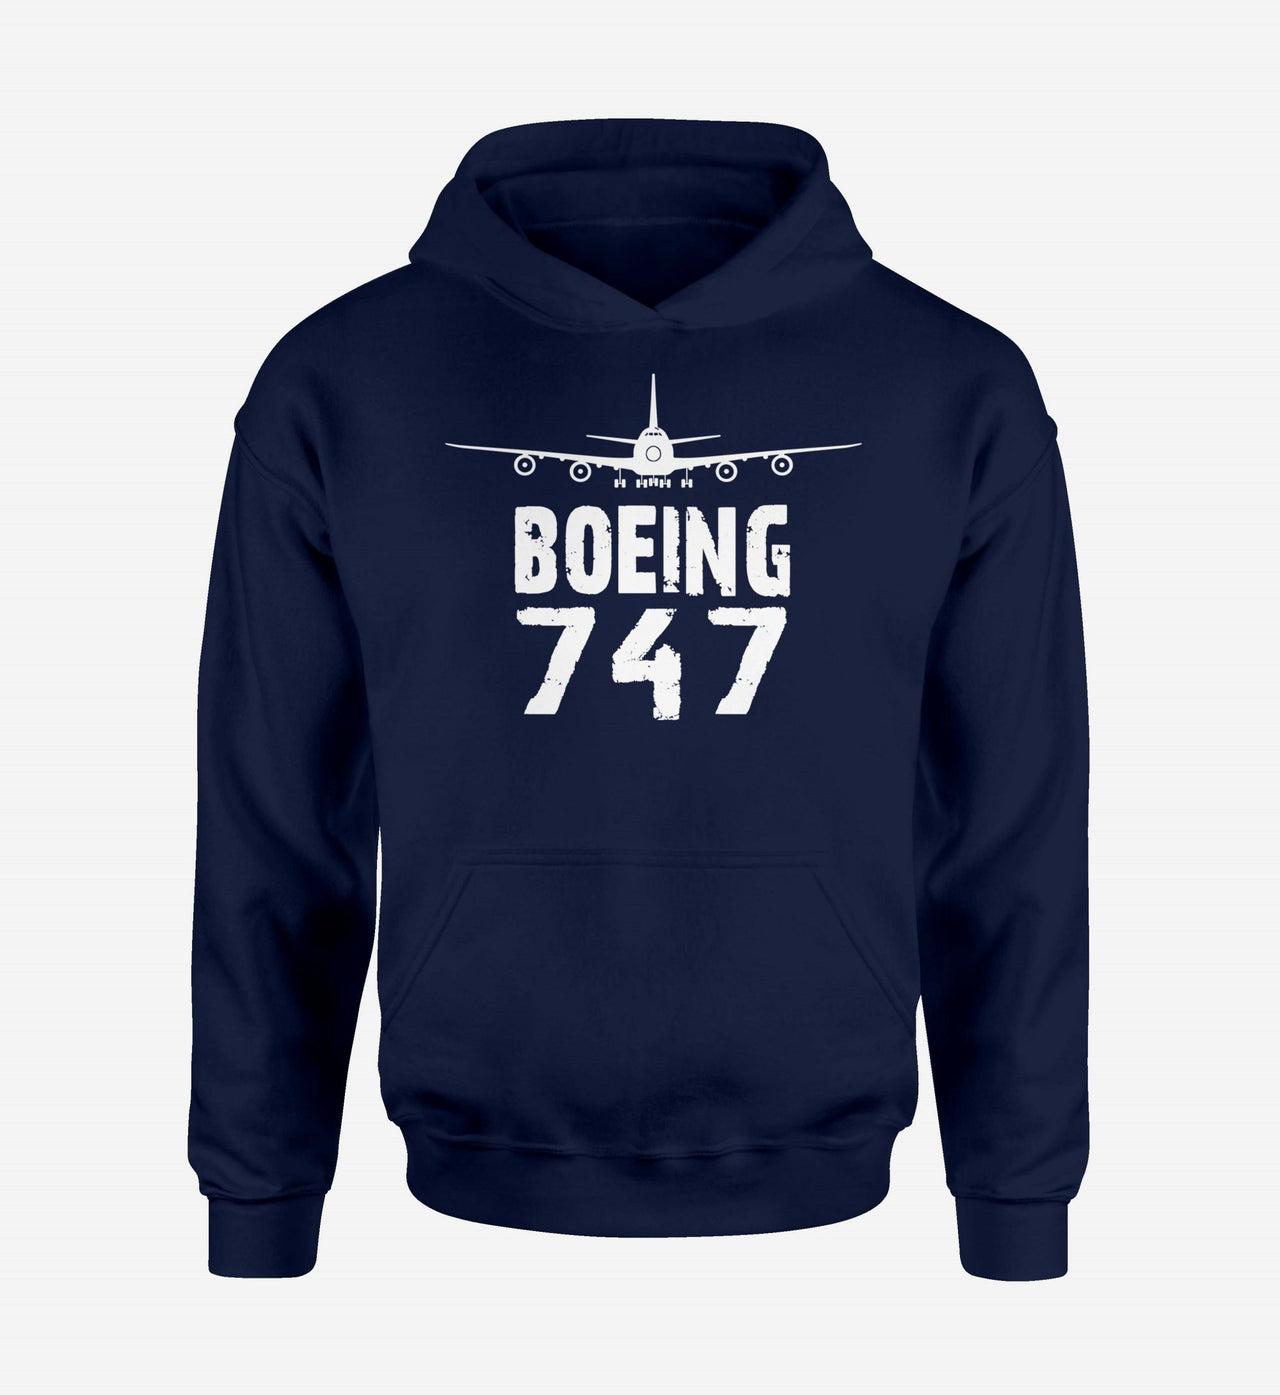 Boeing 747 & Plane Designed Hoodies